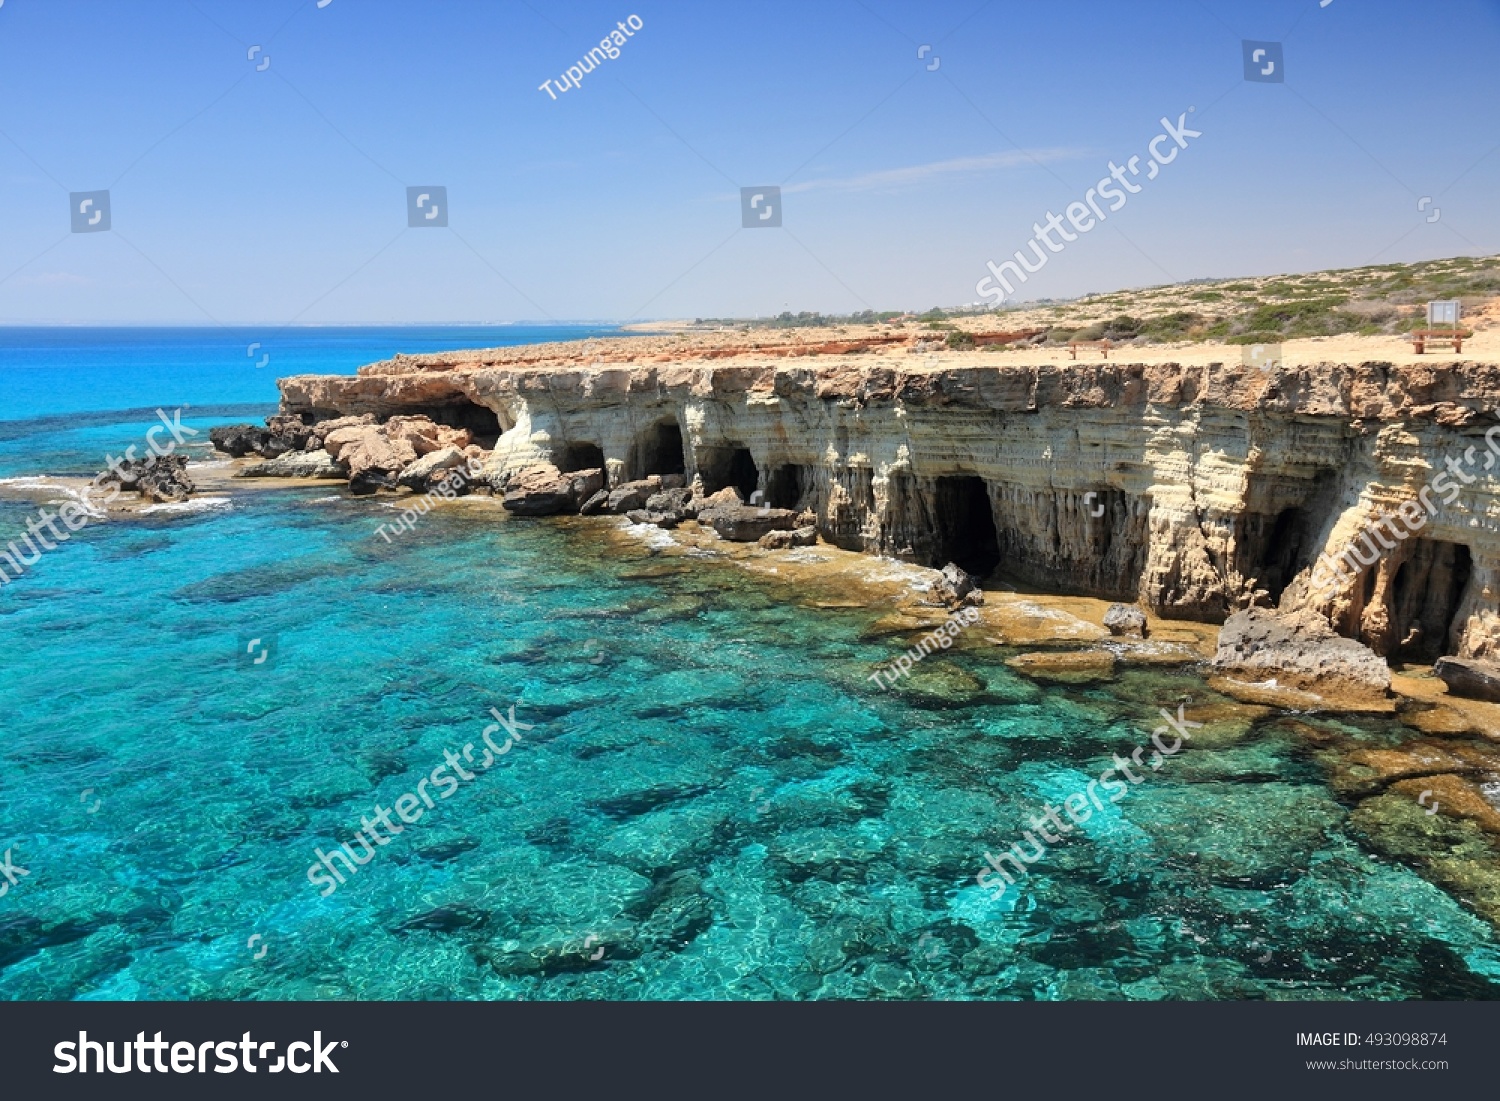 Ayia Napa Cyprus Sea Cave Views Landscape Photo Art Print Poster 18x12